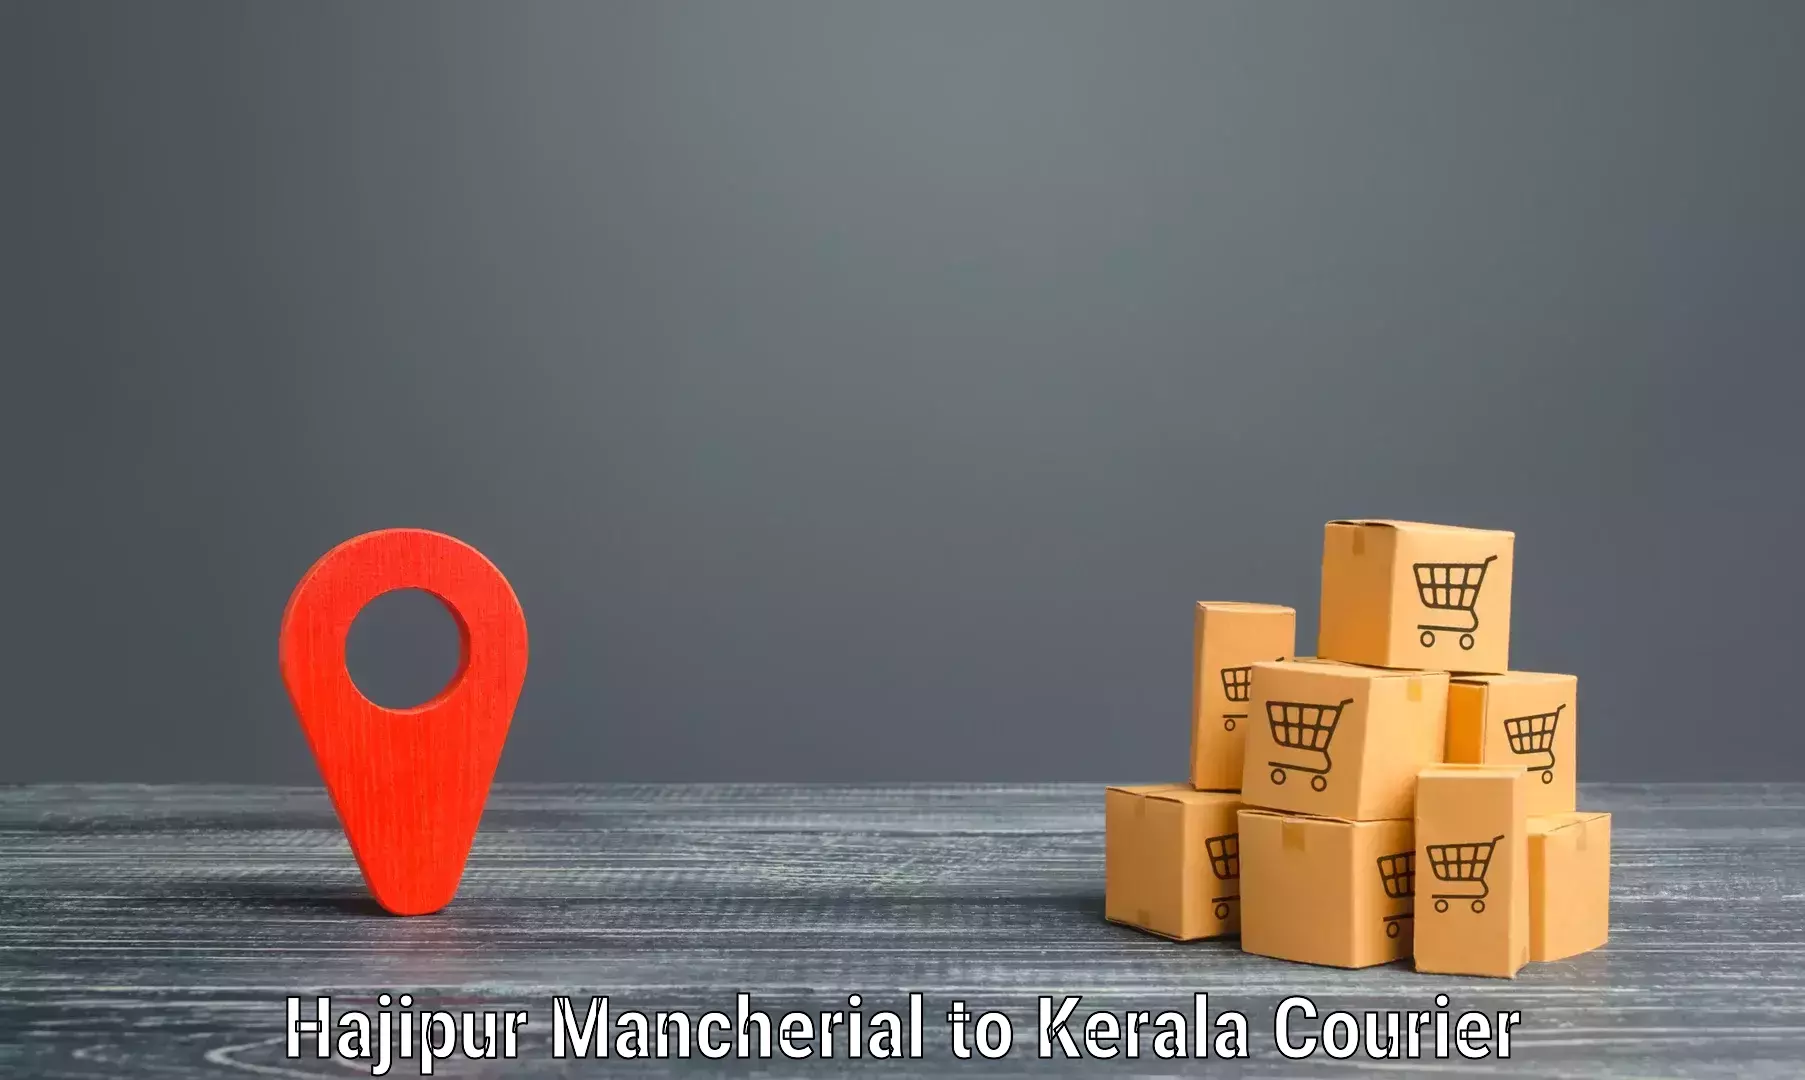 Reliable logistics providers Hajipur Mancherial to Kazhakkoottam